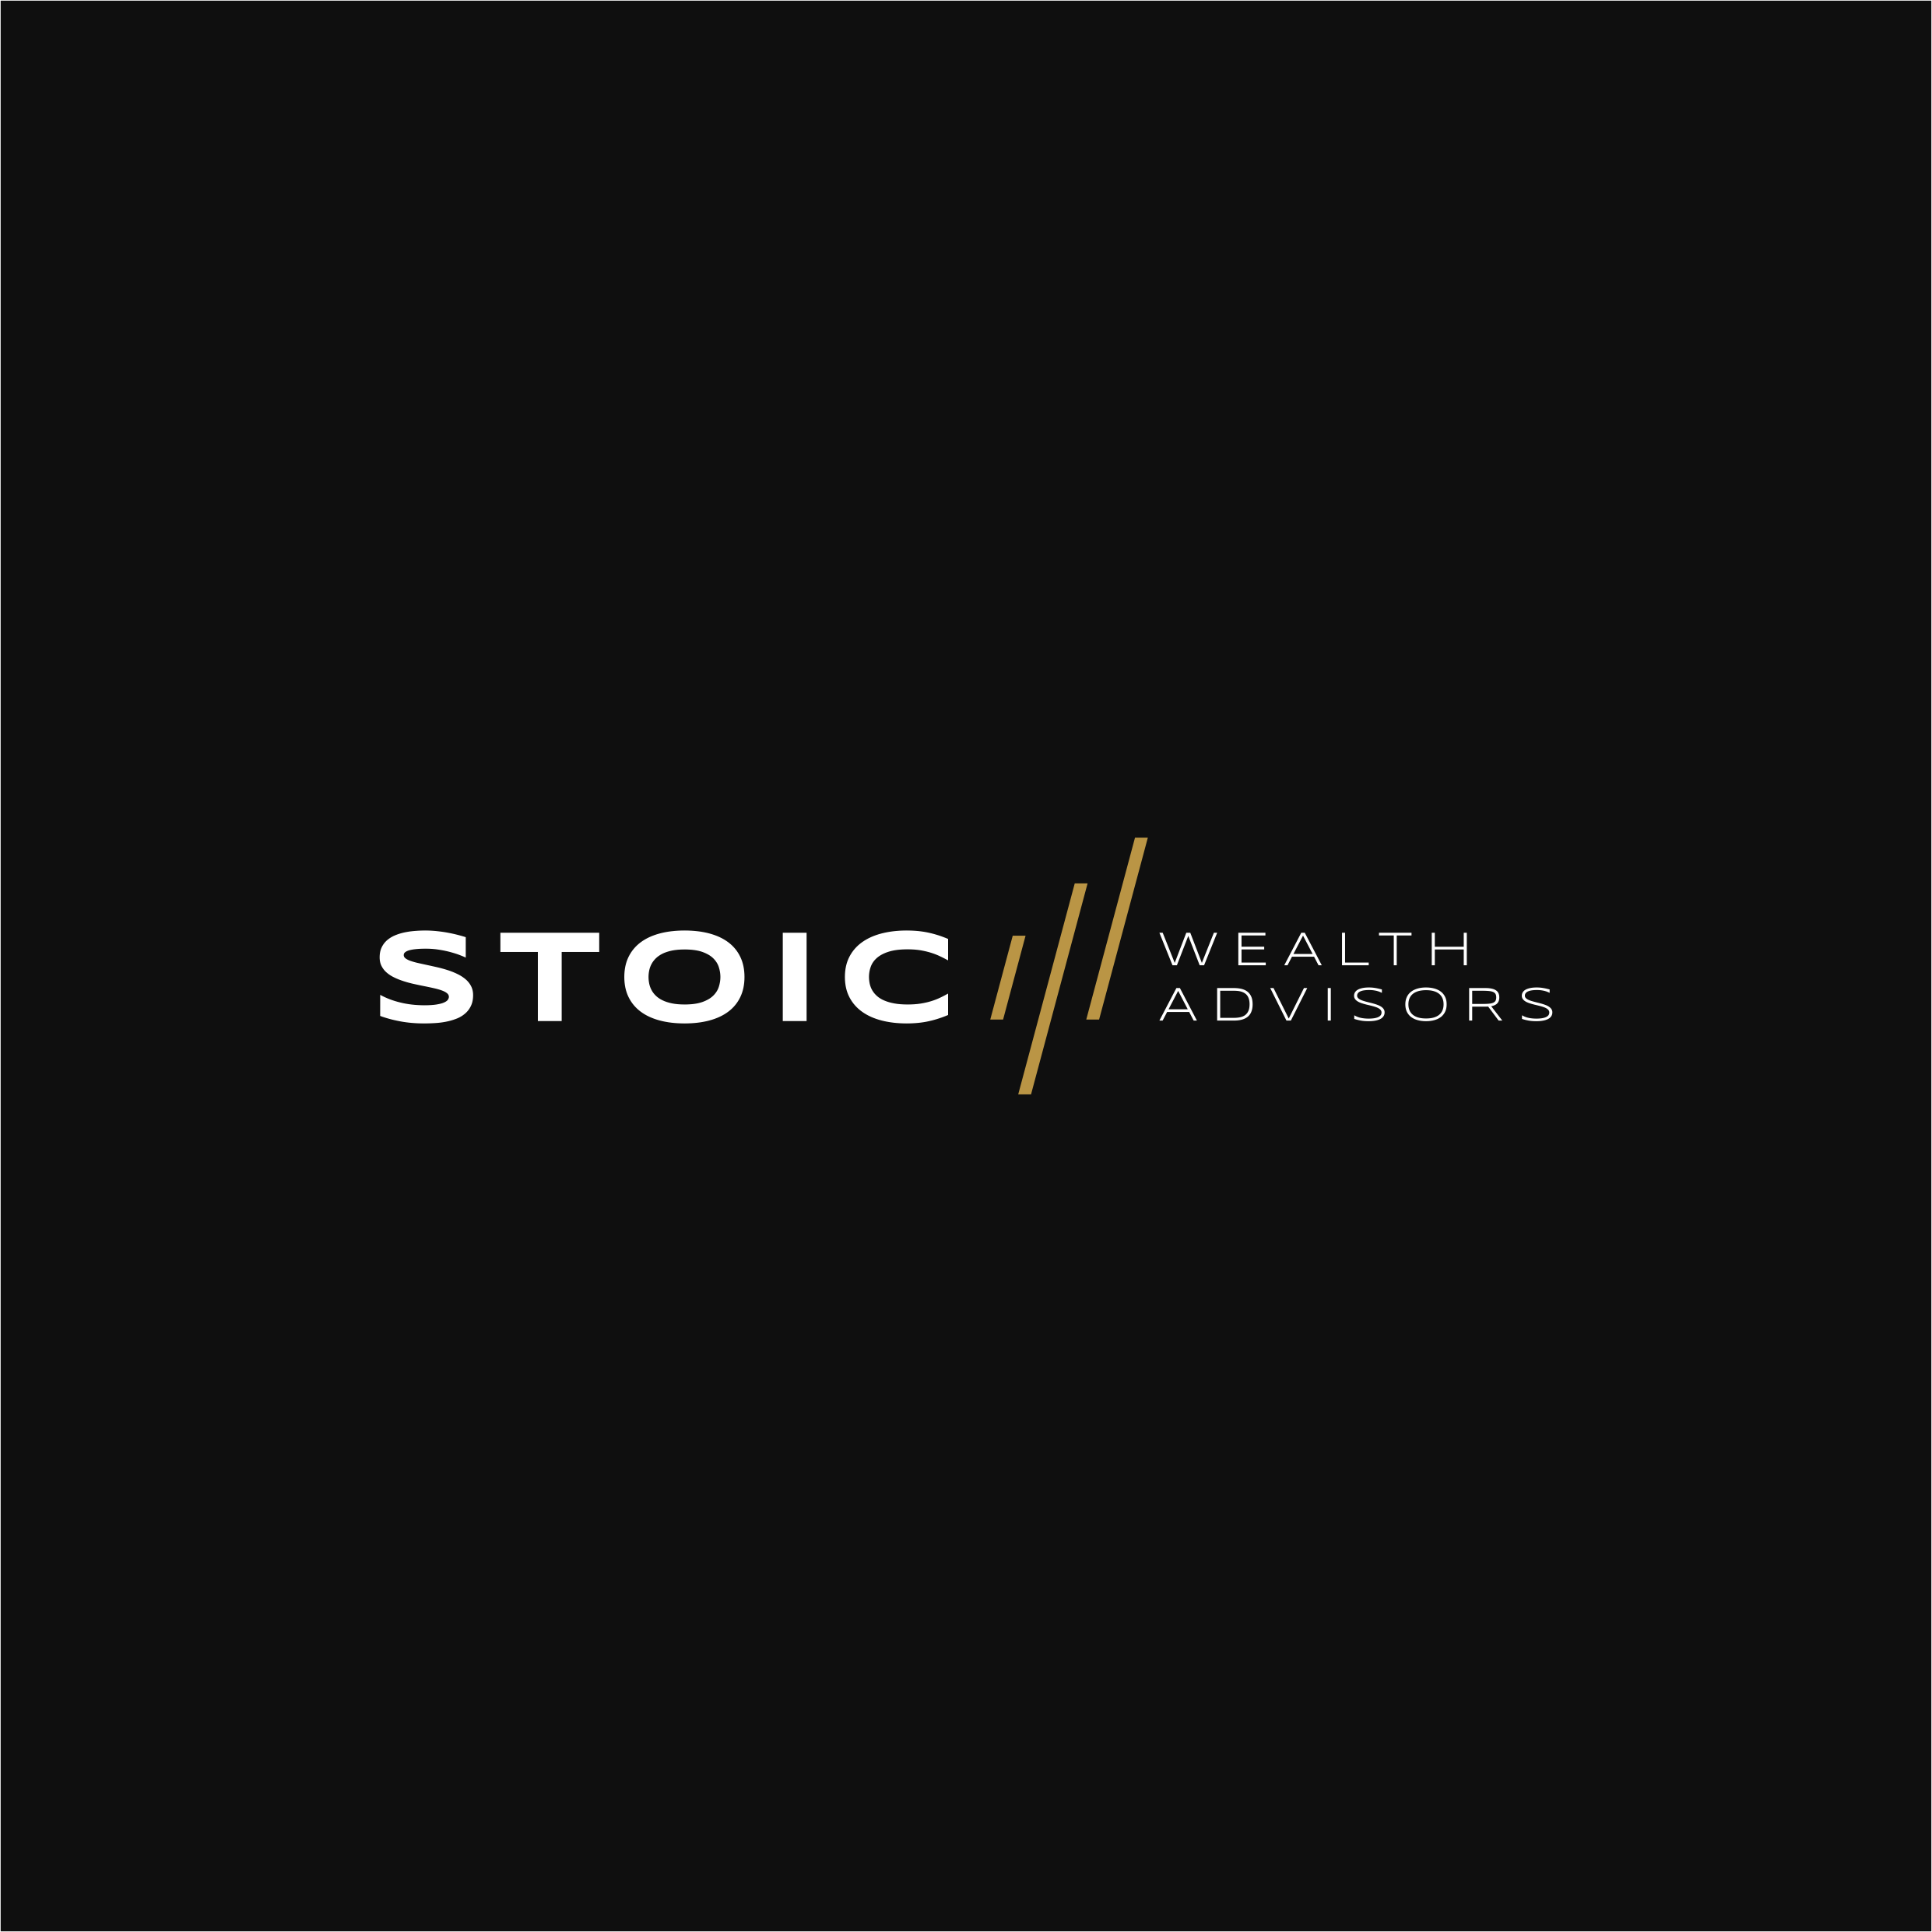 Stoic Wealth Advisors